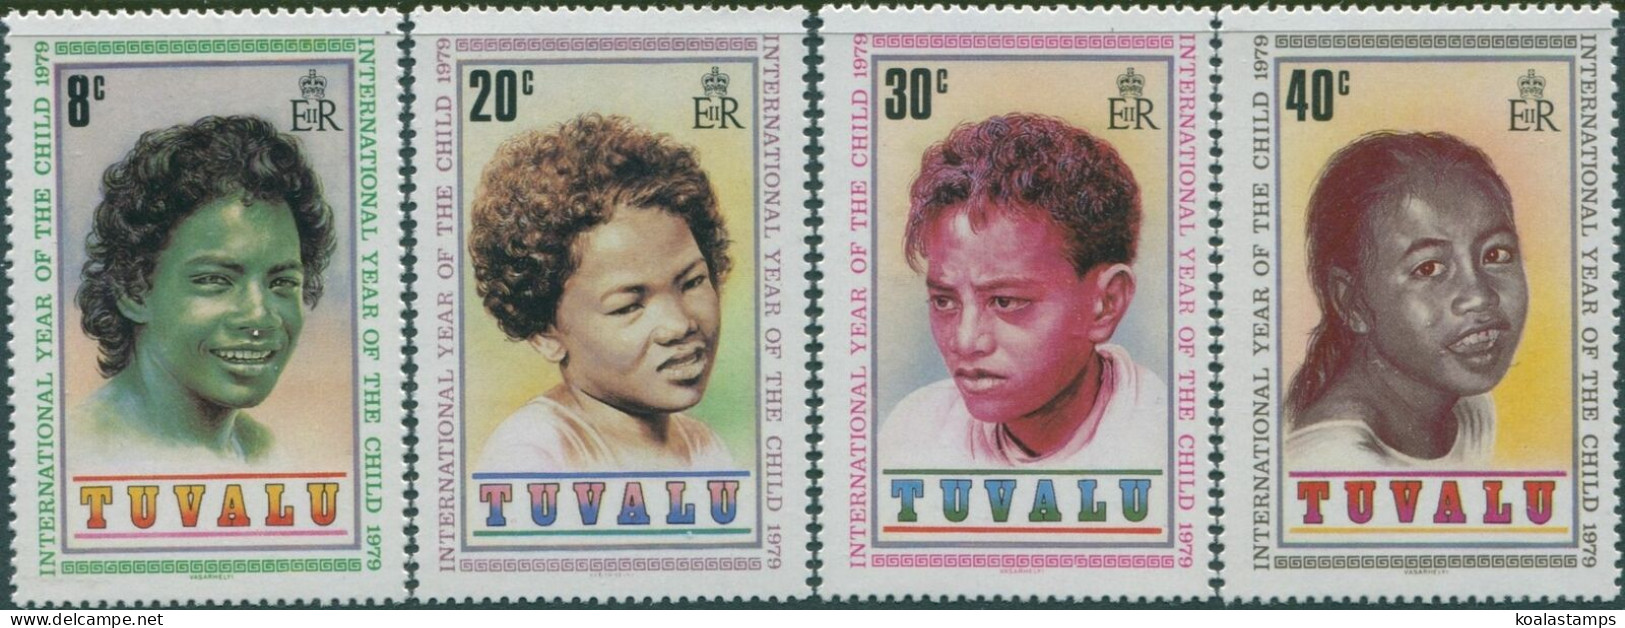 Tuvalu 1979 SG135-138 IYC Set MNH - Tuvalu